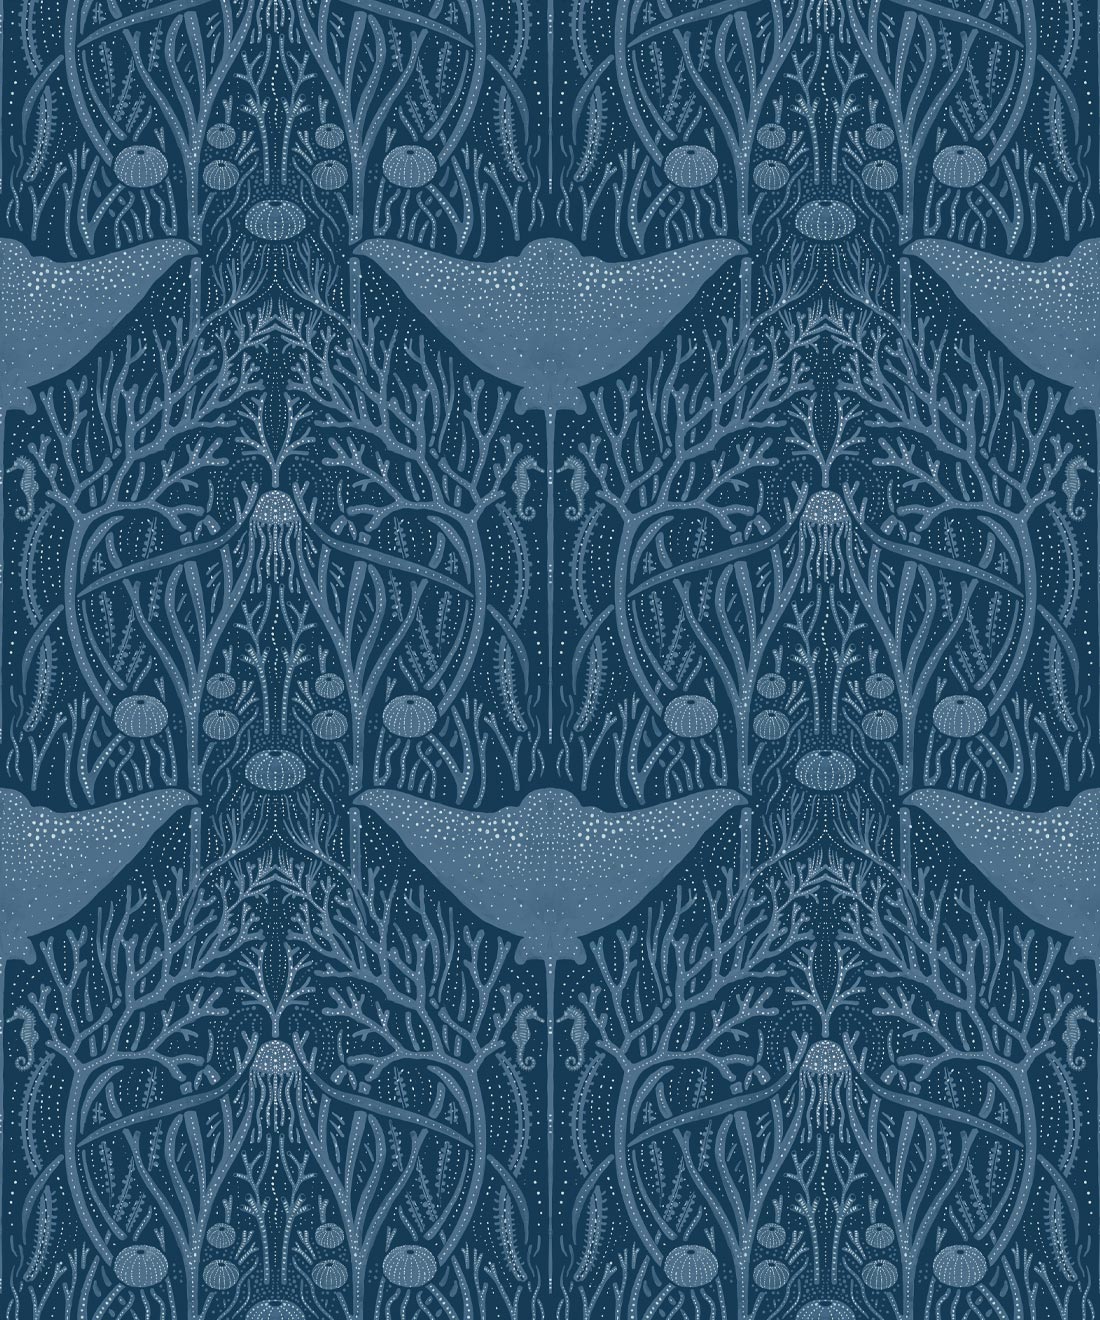 Manta Ray Wallpaper • Floral Wallpaper • Blue • Swatch